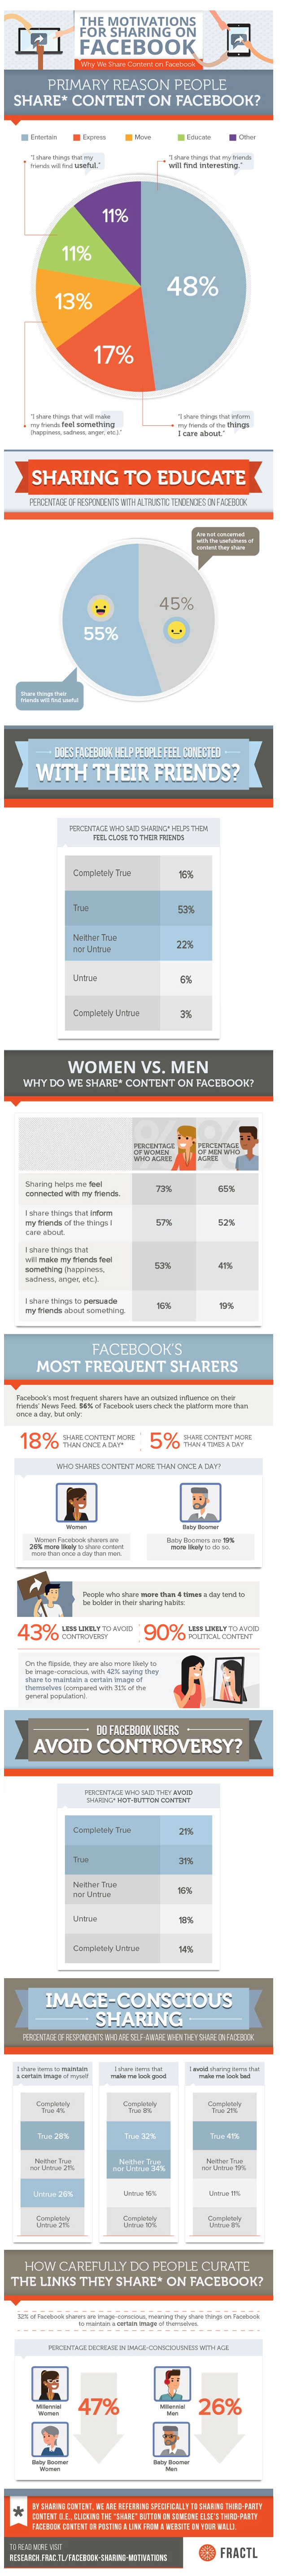 Infographie 299 - Facebook sharing motivations